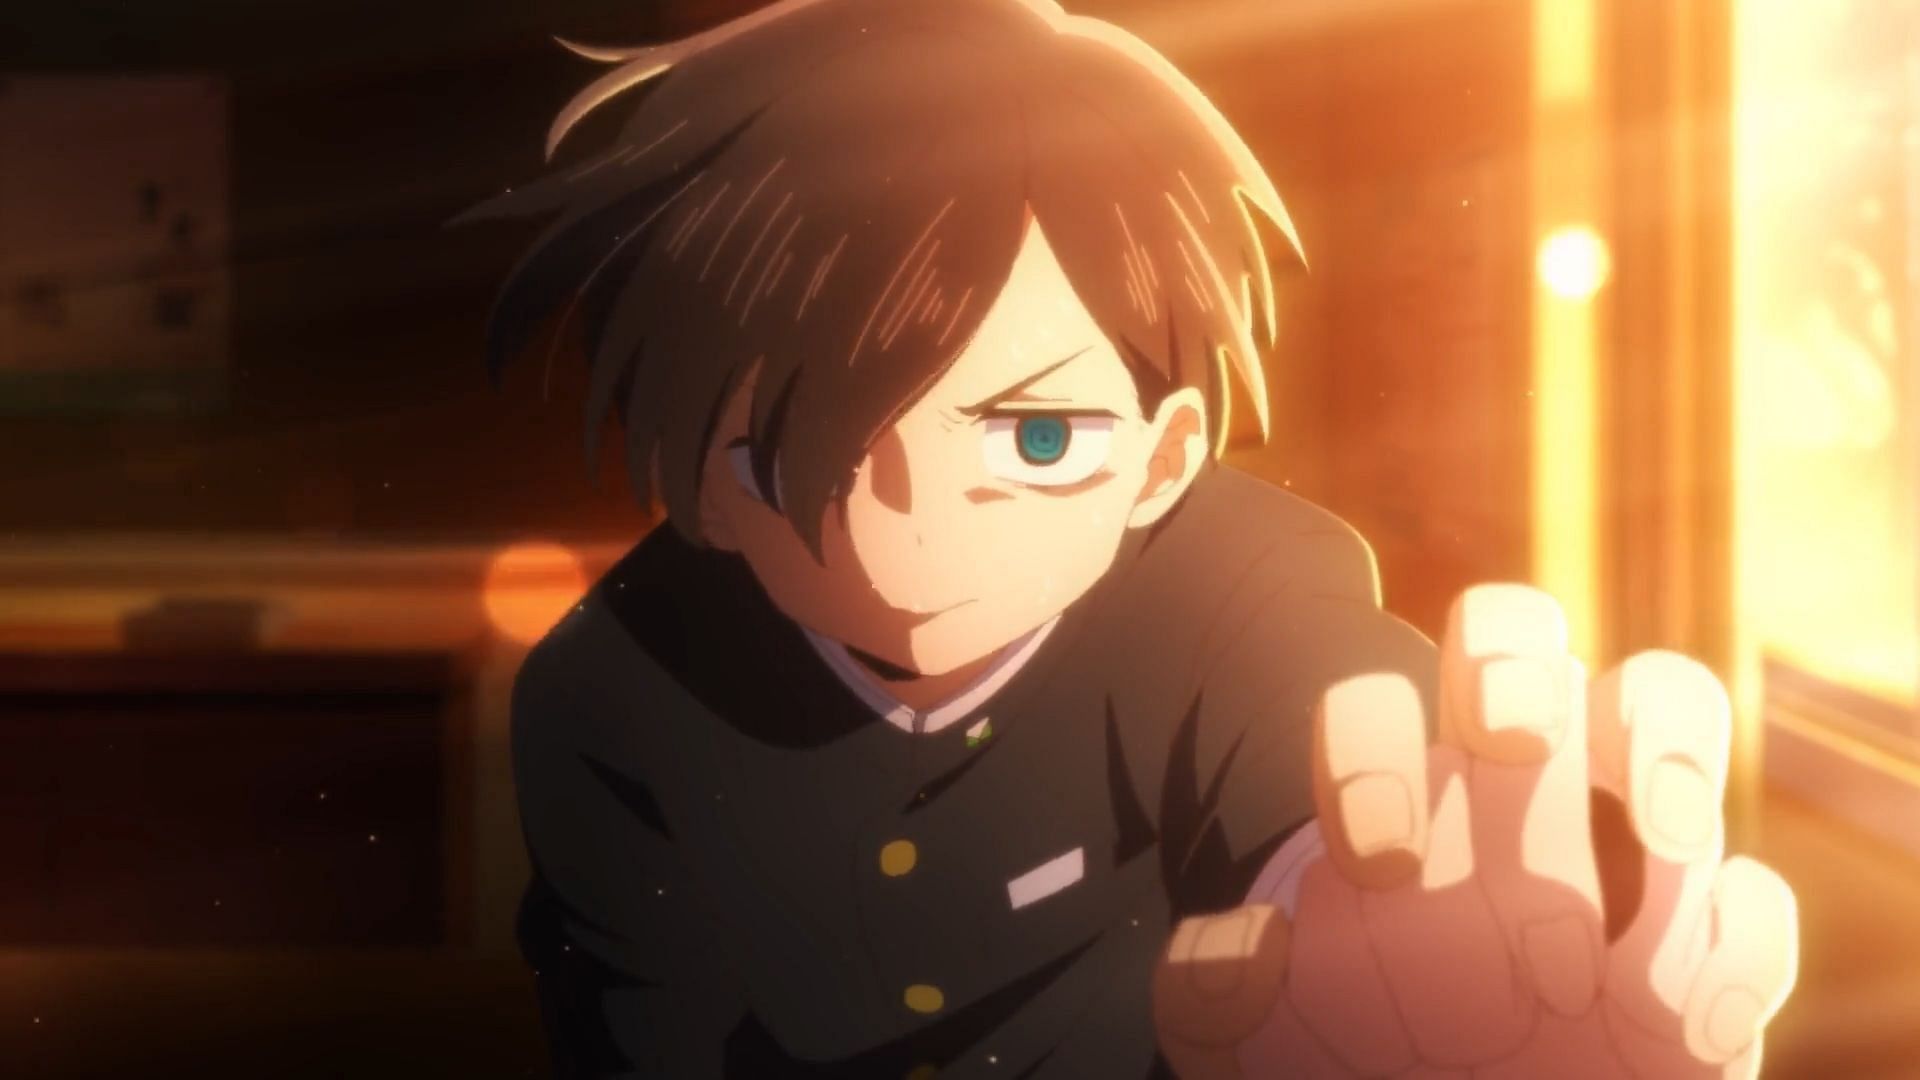 Ichikawa as seen in the anime (Image via Shin-Ei Animation)